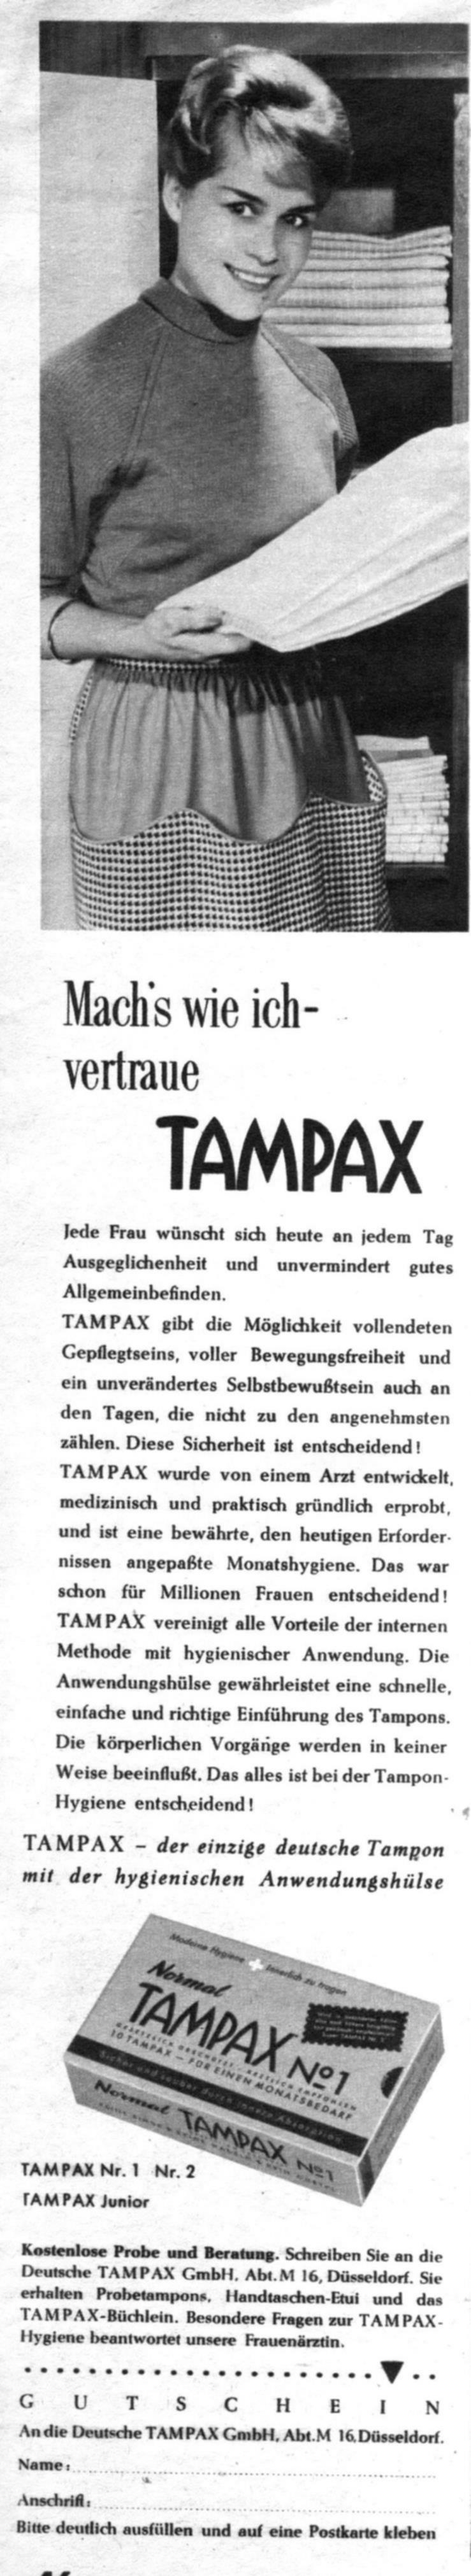 Tampax 1960 174.jpg